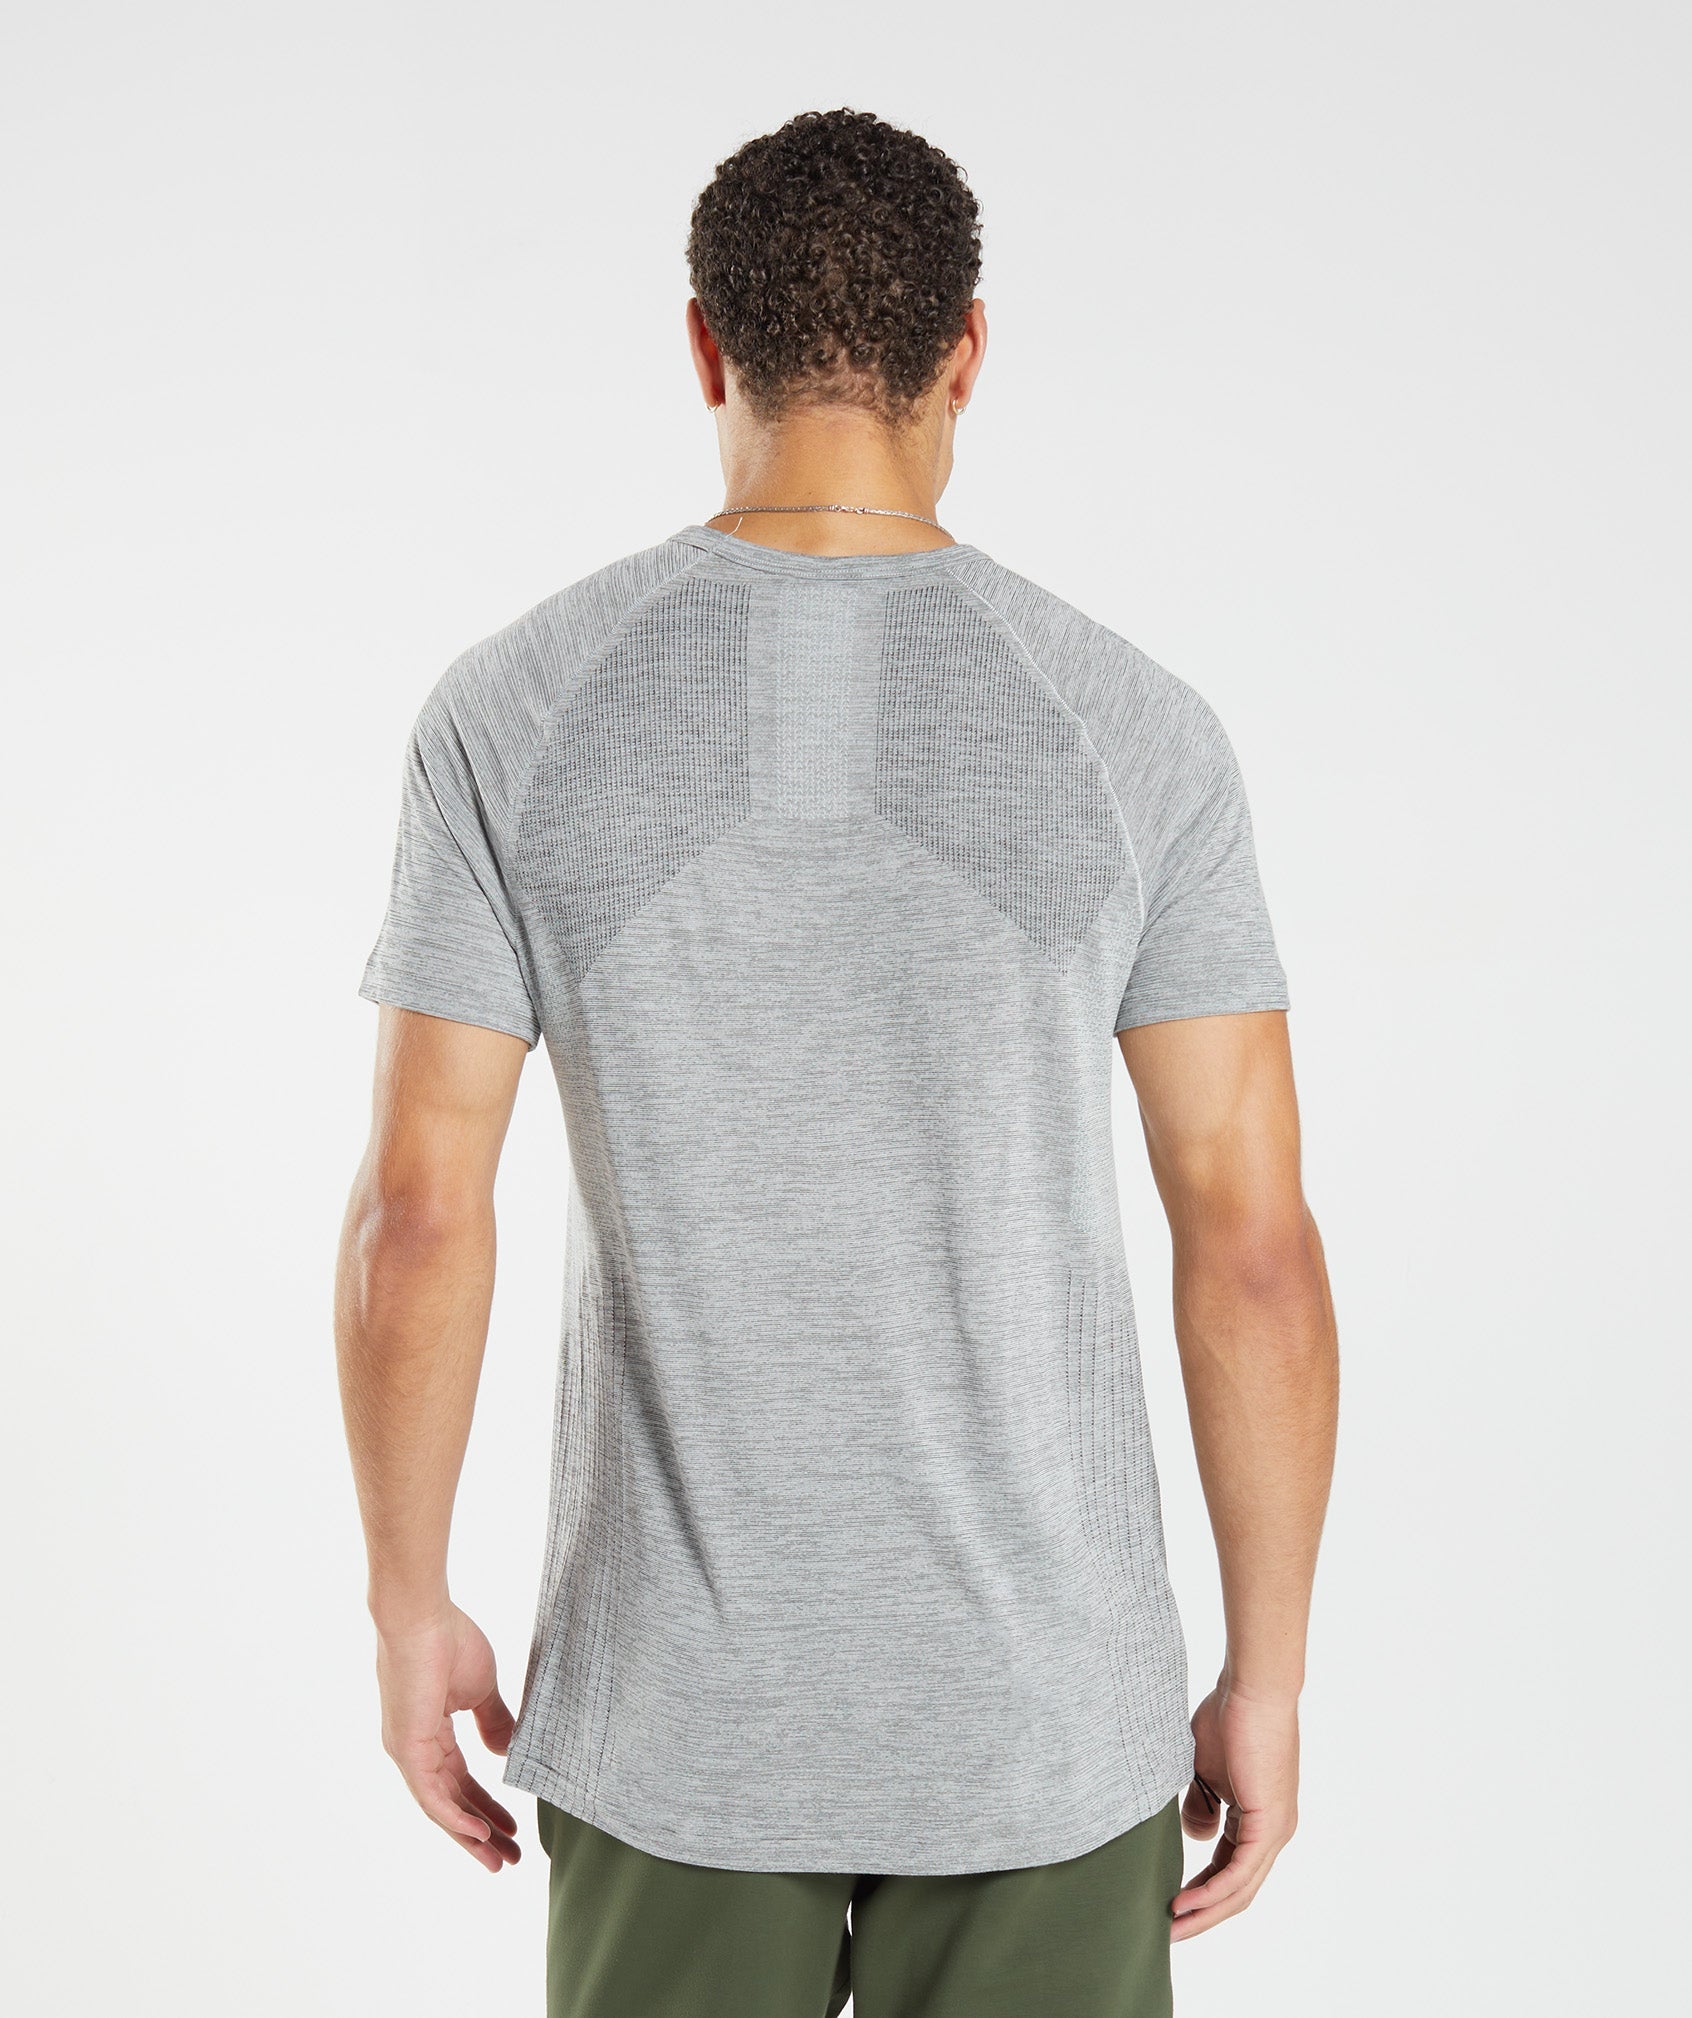 Retake Seamless T-Shirt in Light Grey/Black Marl - view 2